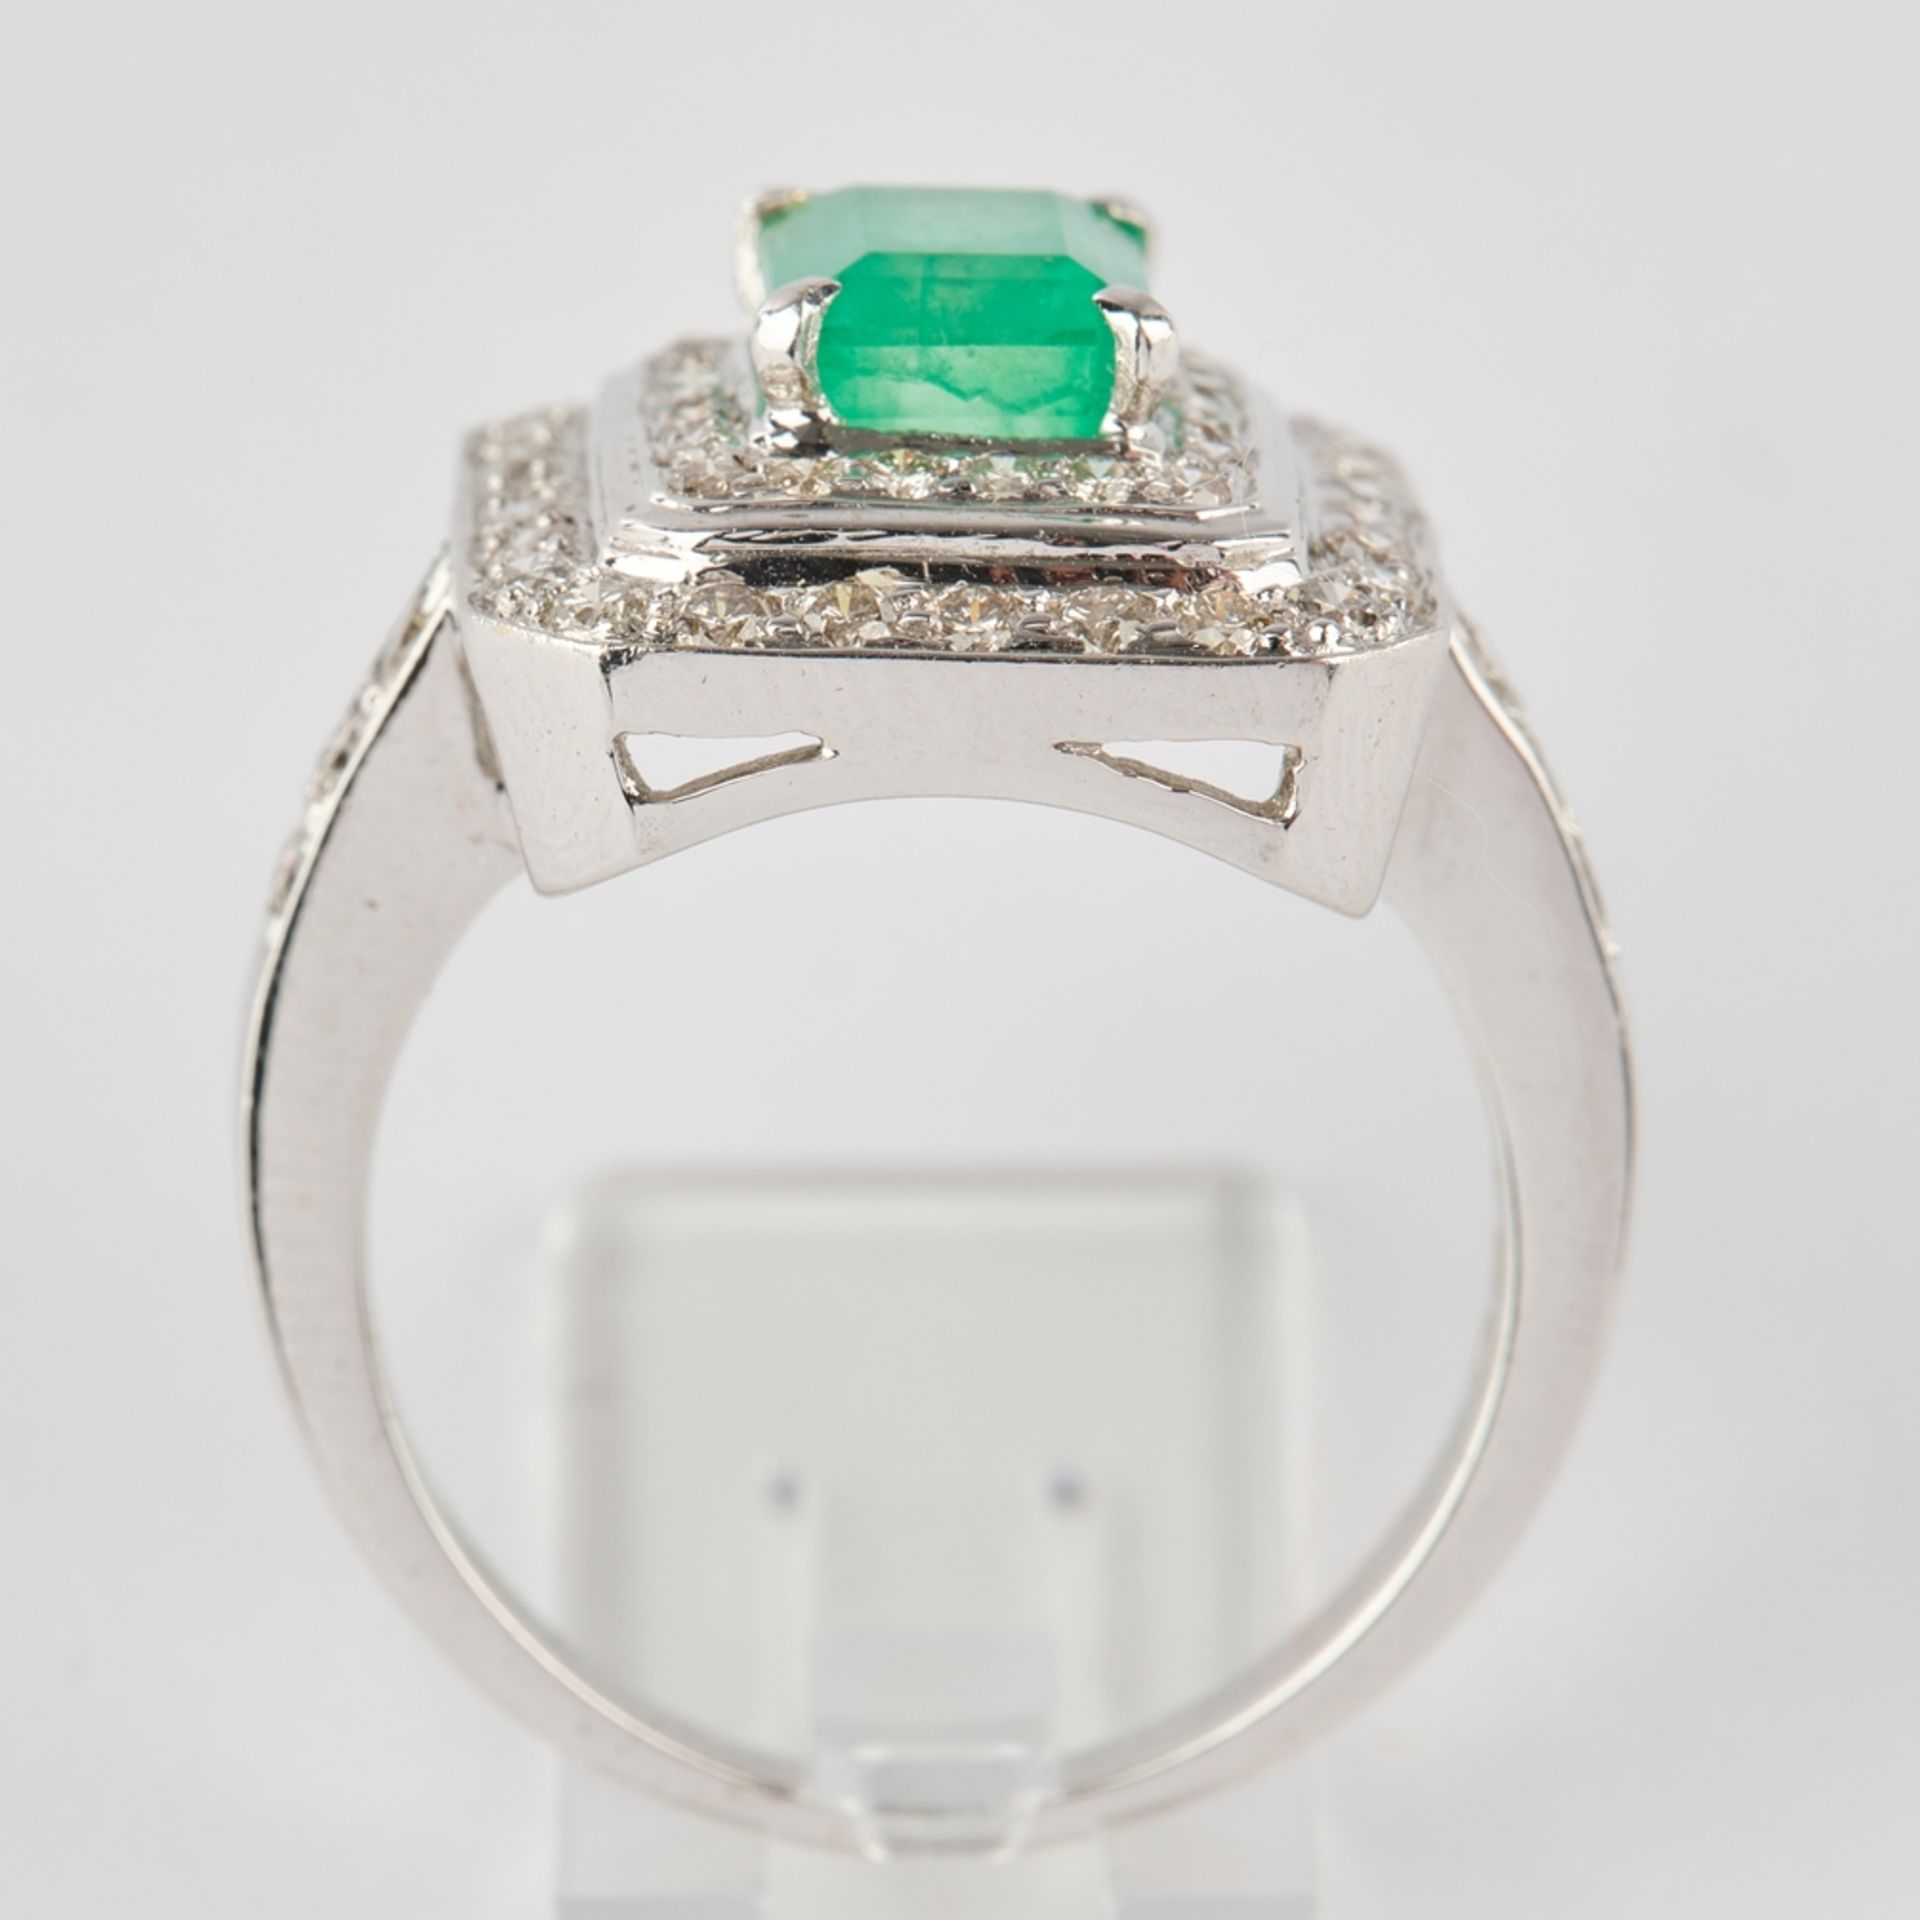 Ring, Art Deco-Stil, WG 750, Smaragd ca. 1.76 ct., Brillanten zus. ca. 1.02 ct. - Bild 3 aus 3